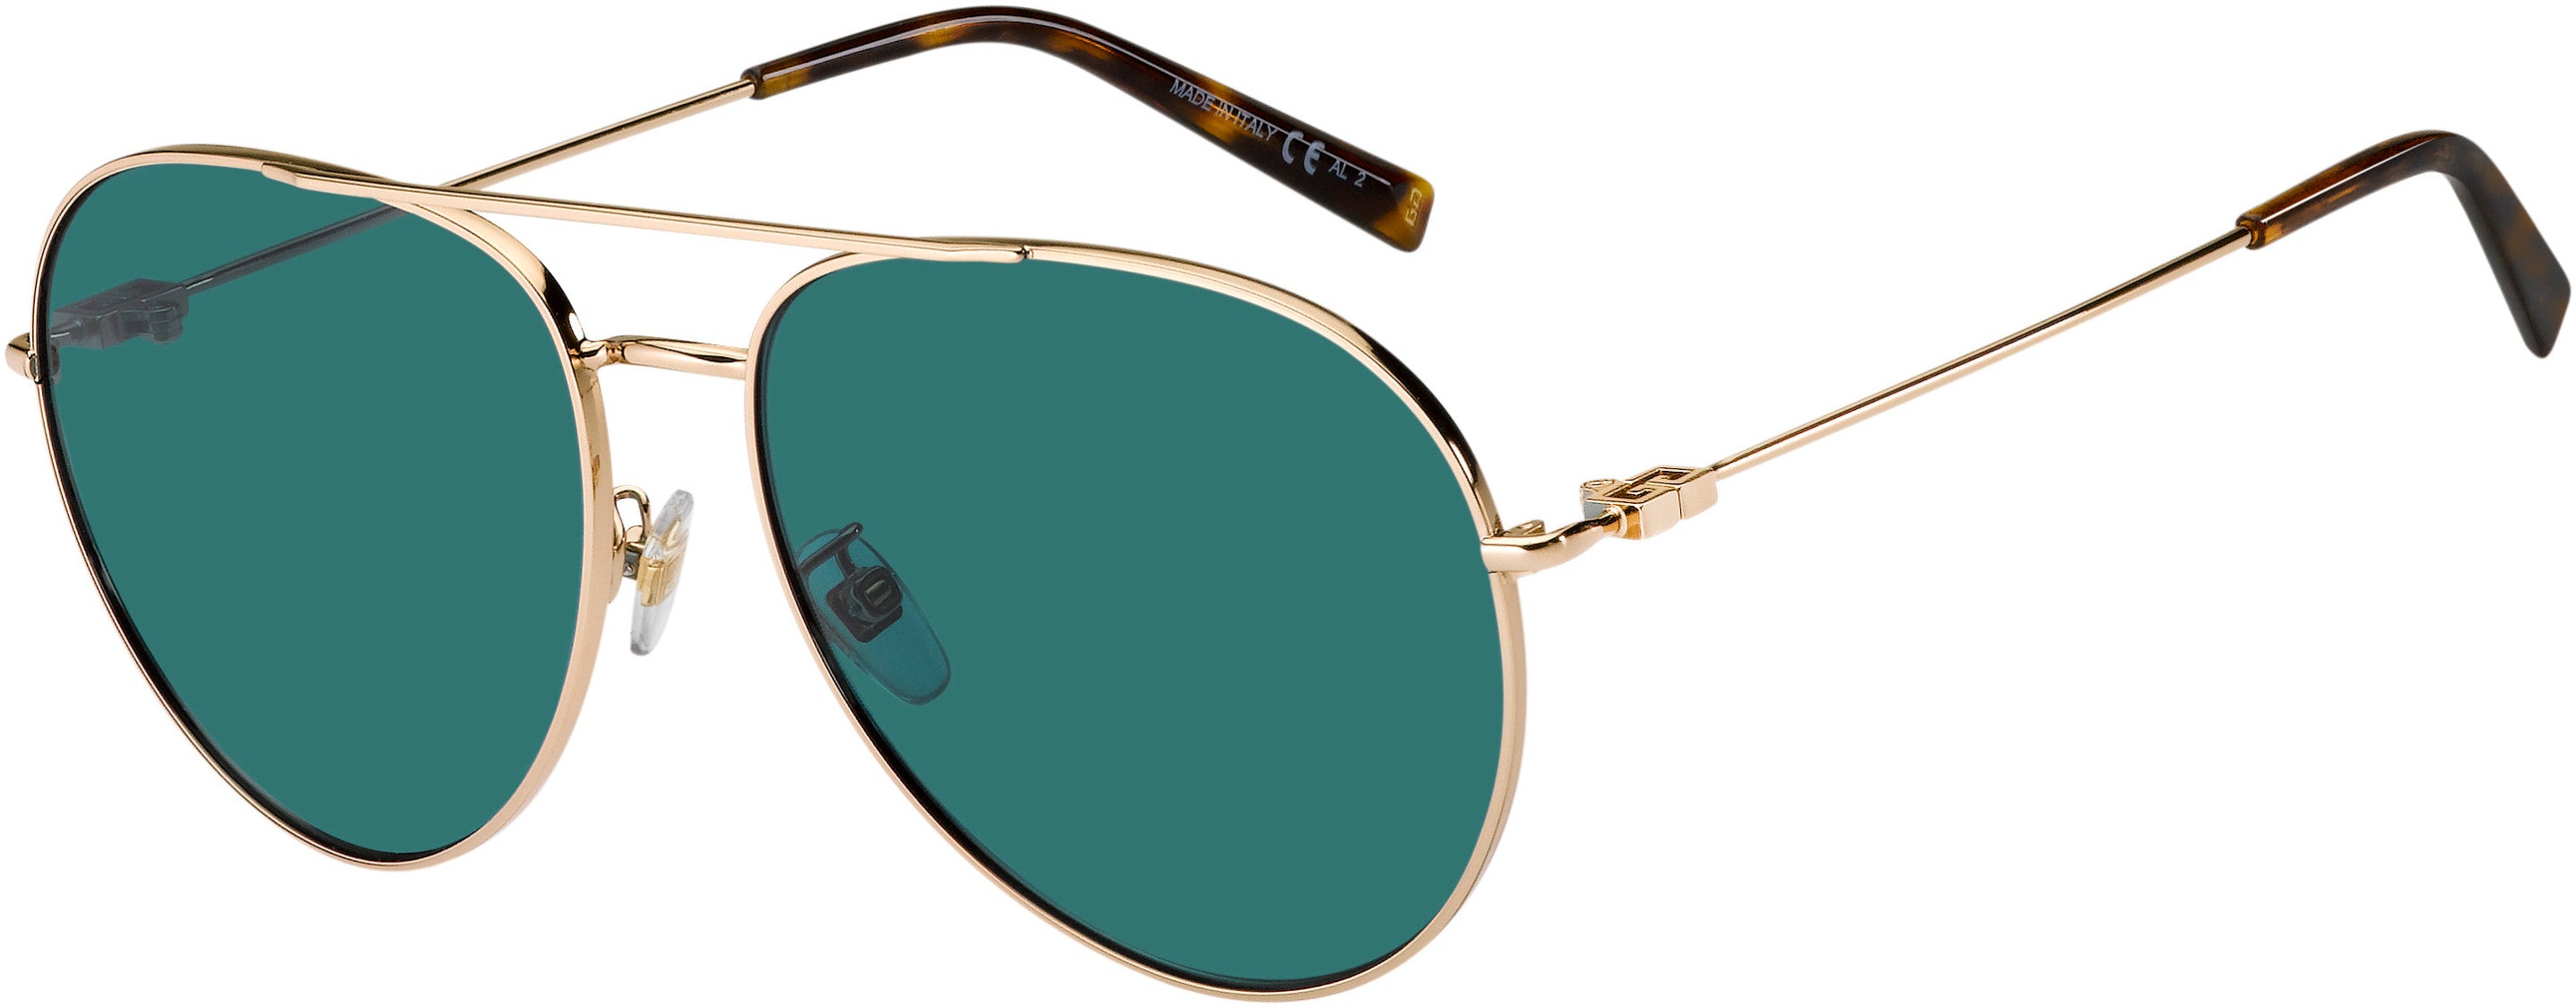  Givenchy 7196/G/S Aviator Sunglasses 0000-0000  Rose Gold (KU Blue)